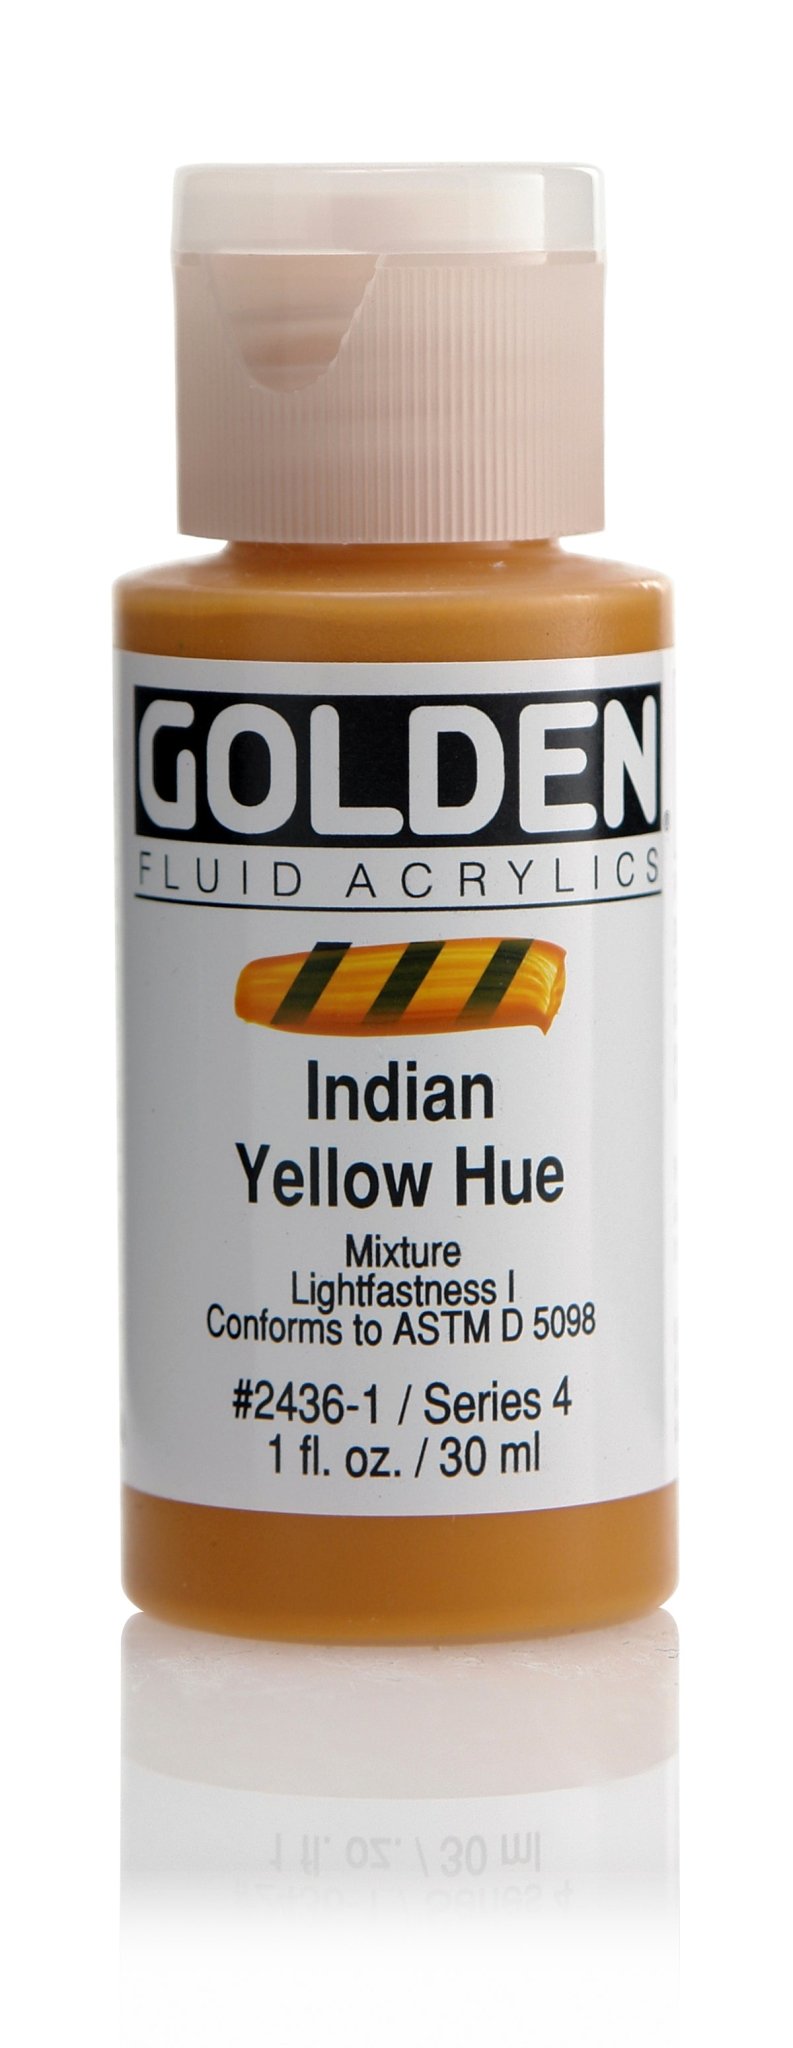 Golden Fluid Acrylics - Indian Yellow Hue - 30ml - Create A Little Magic (Pty) Ltd